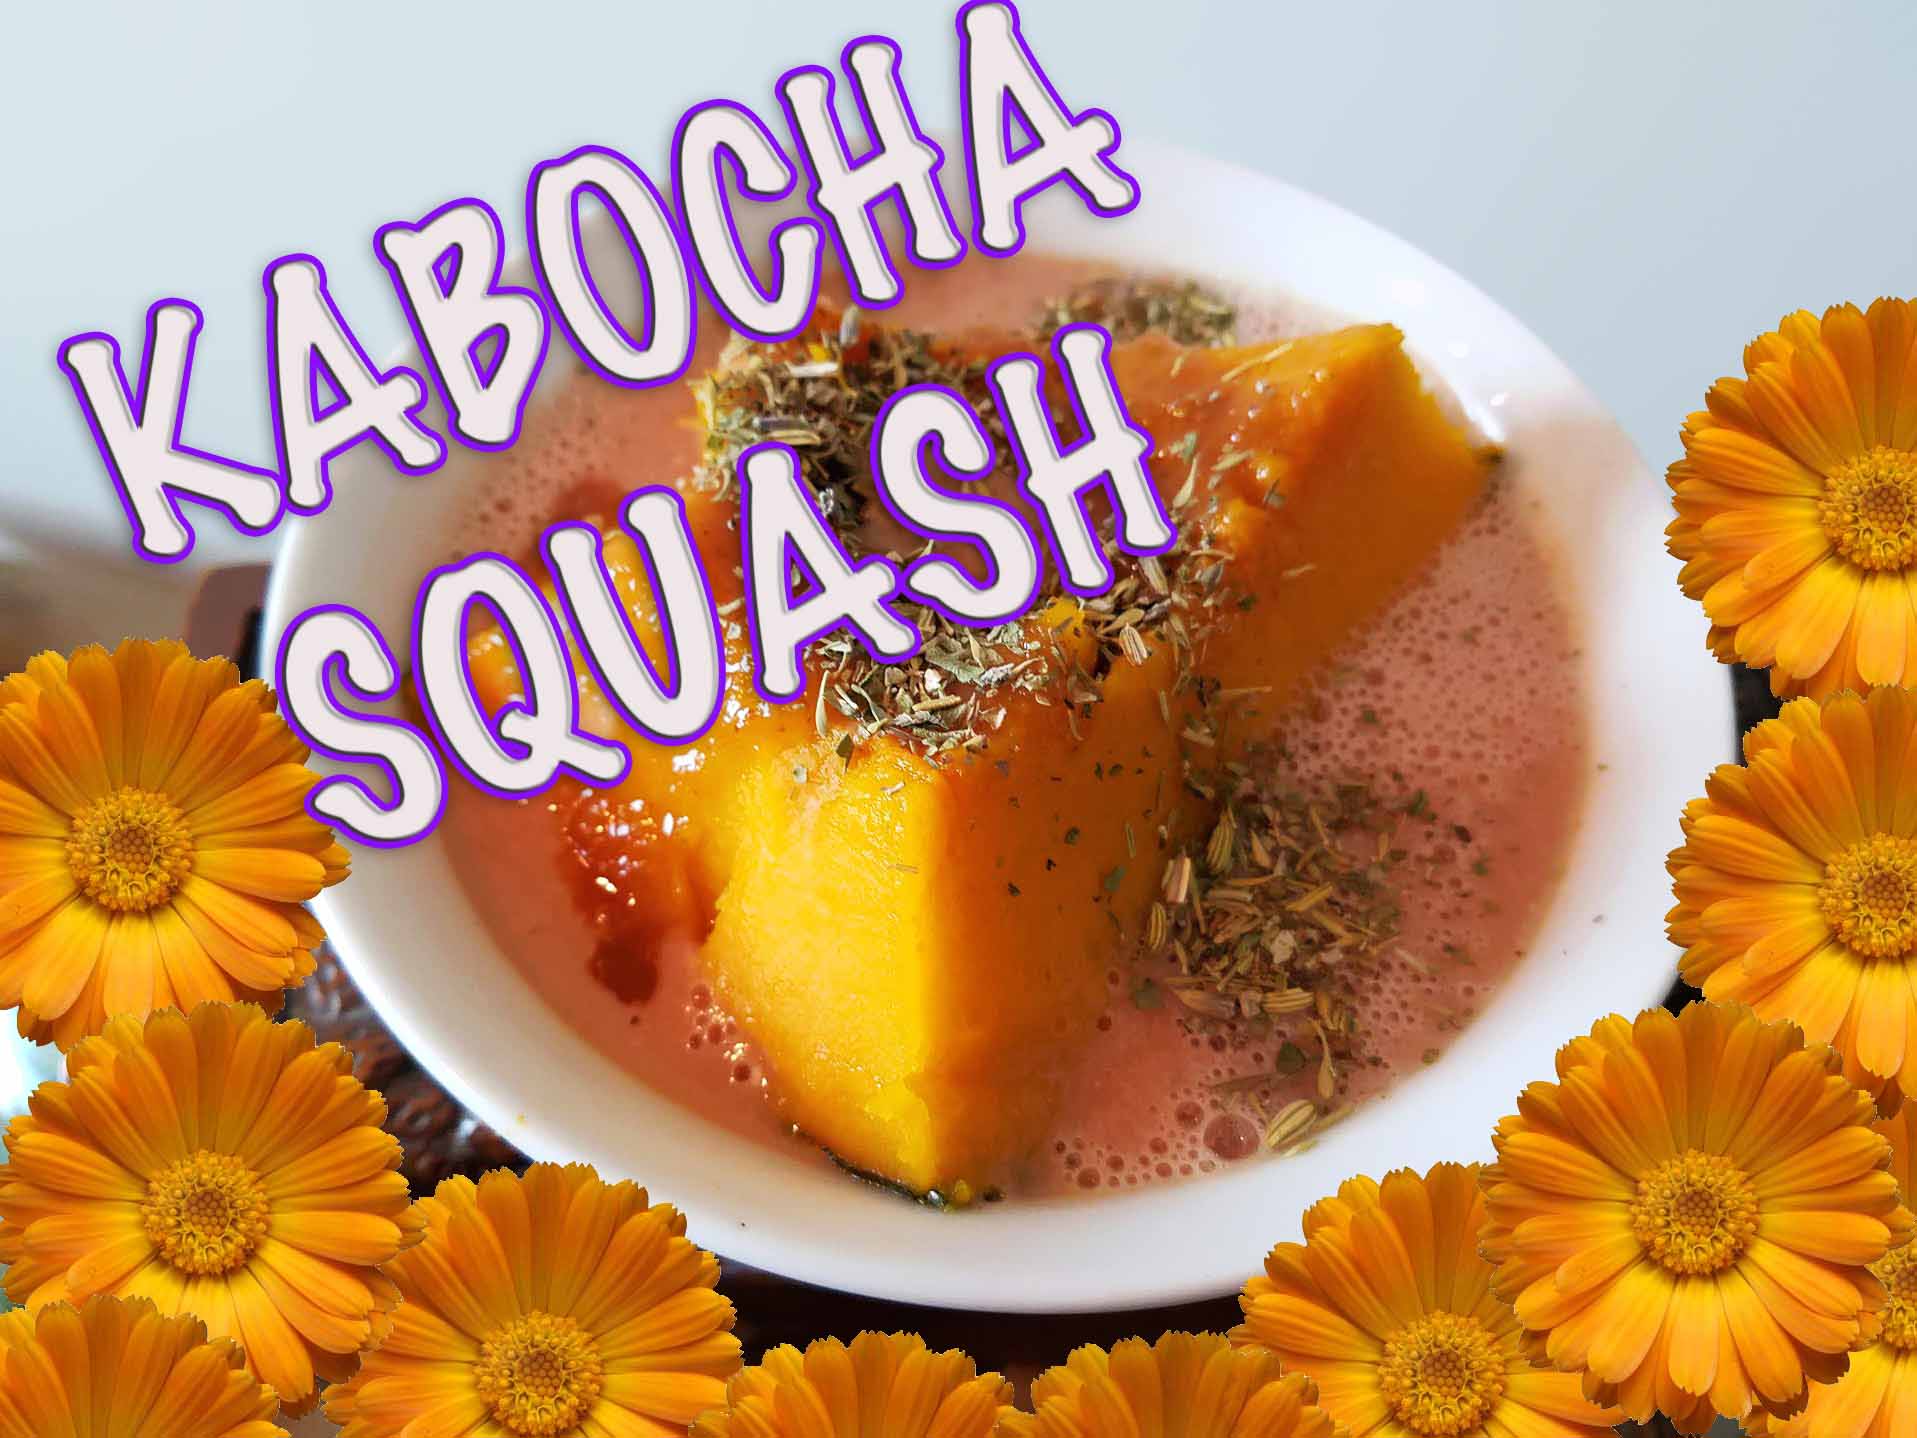 kabocha squash with herbs